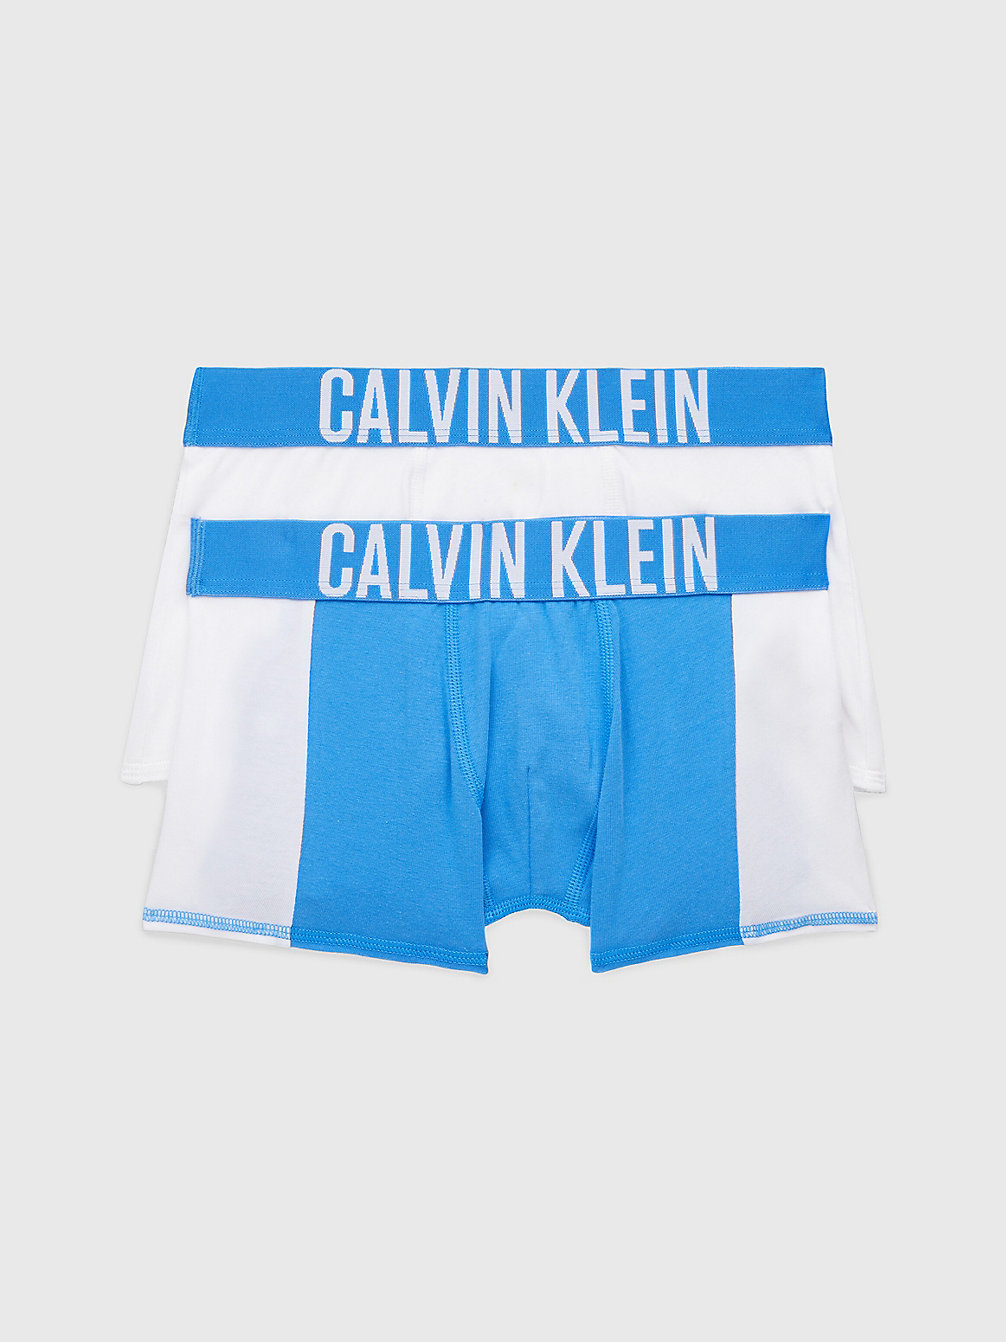 ELECTRICAQUA/PVHWHITE Lot De 2 Boxers Pour Garçon - Intense Power undefined garcons Calvin Klein